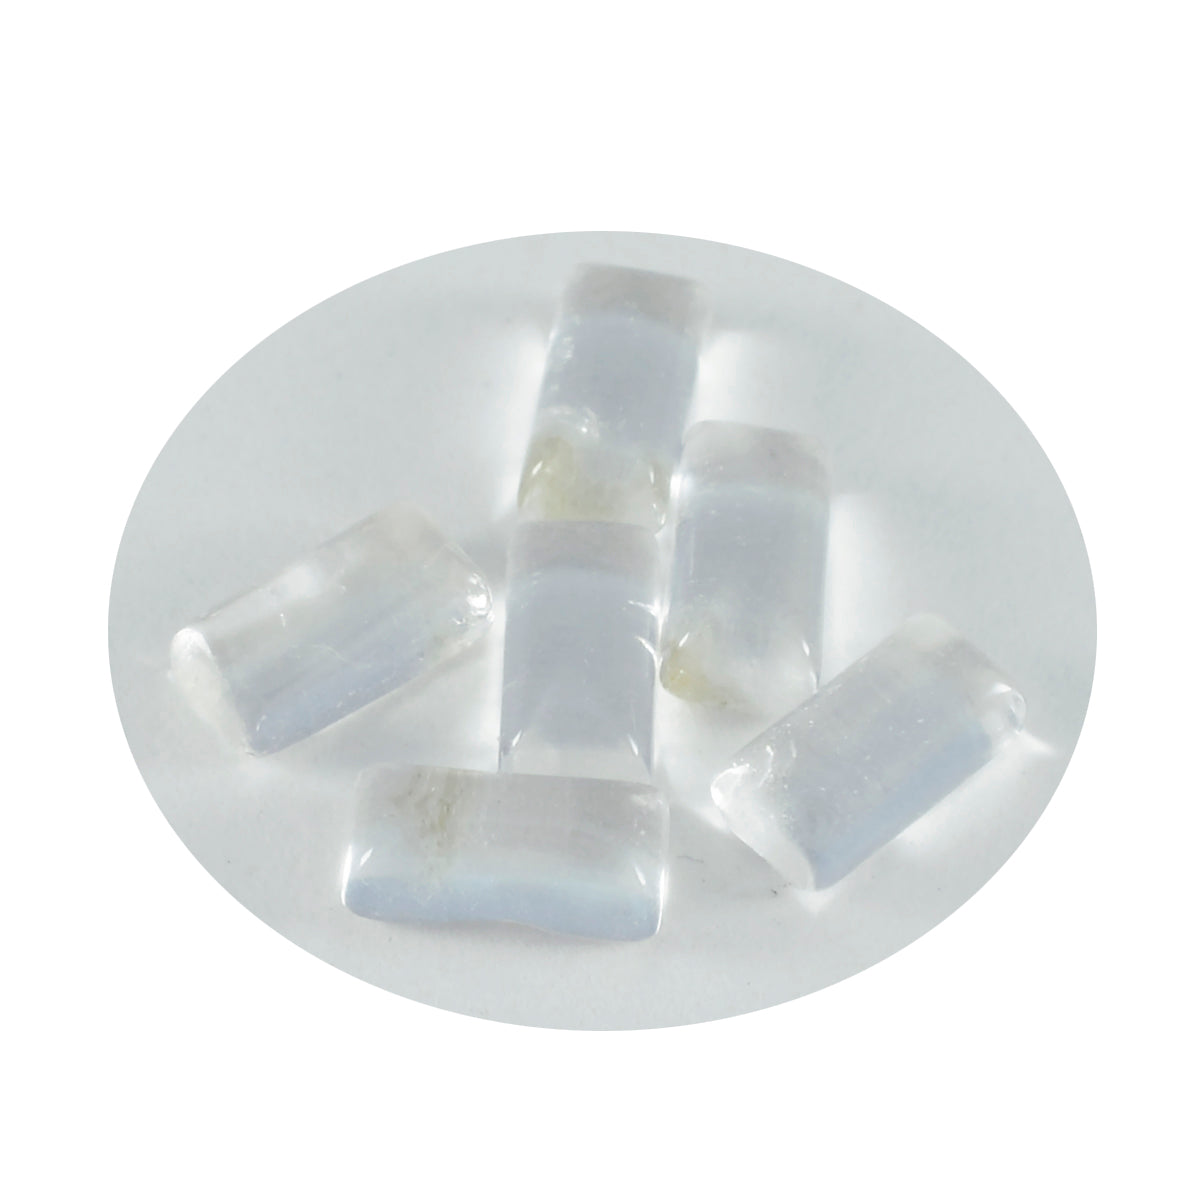 Riyogems 1PC White Crystal Quartz Cabochon 6x12 mm Baguett Shape A1 Quality Loose Gemstone